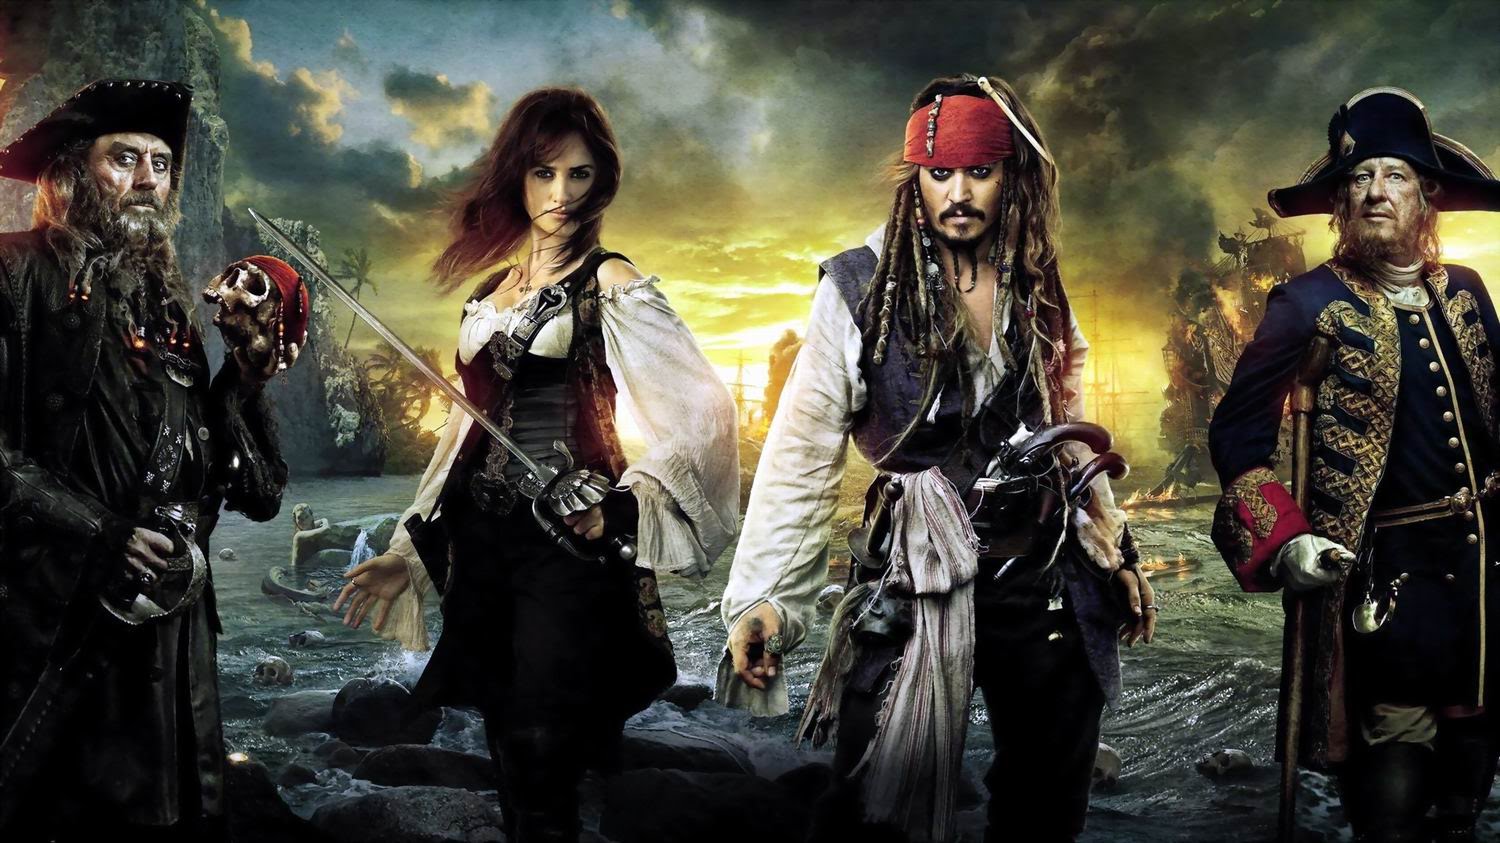 Pirates Of The Caribbean: On Stranger Tides #3